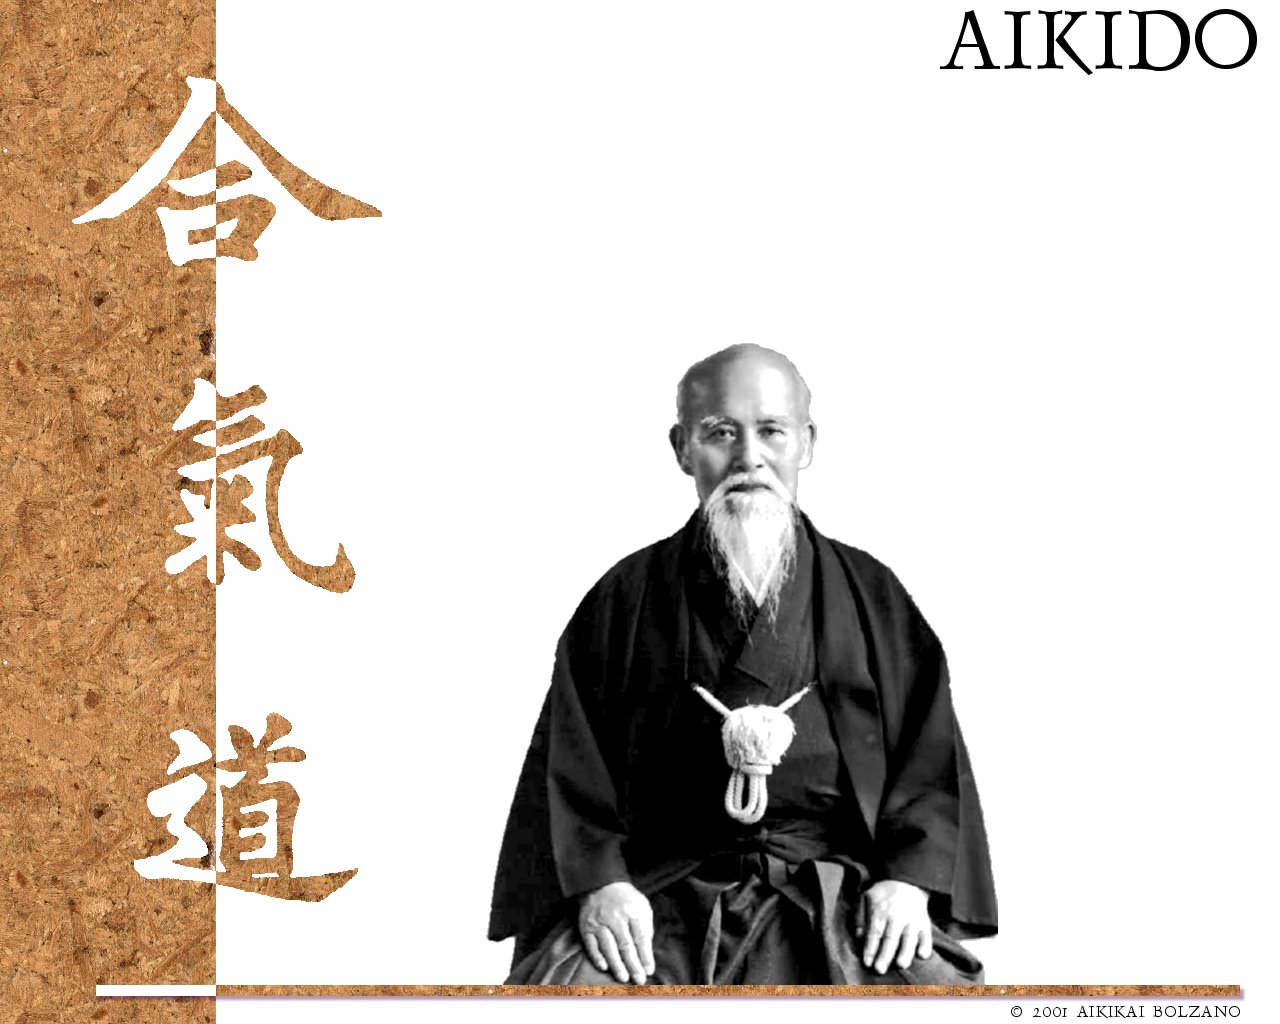 Wele To The Aikido Malaysia Munity Site